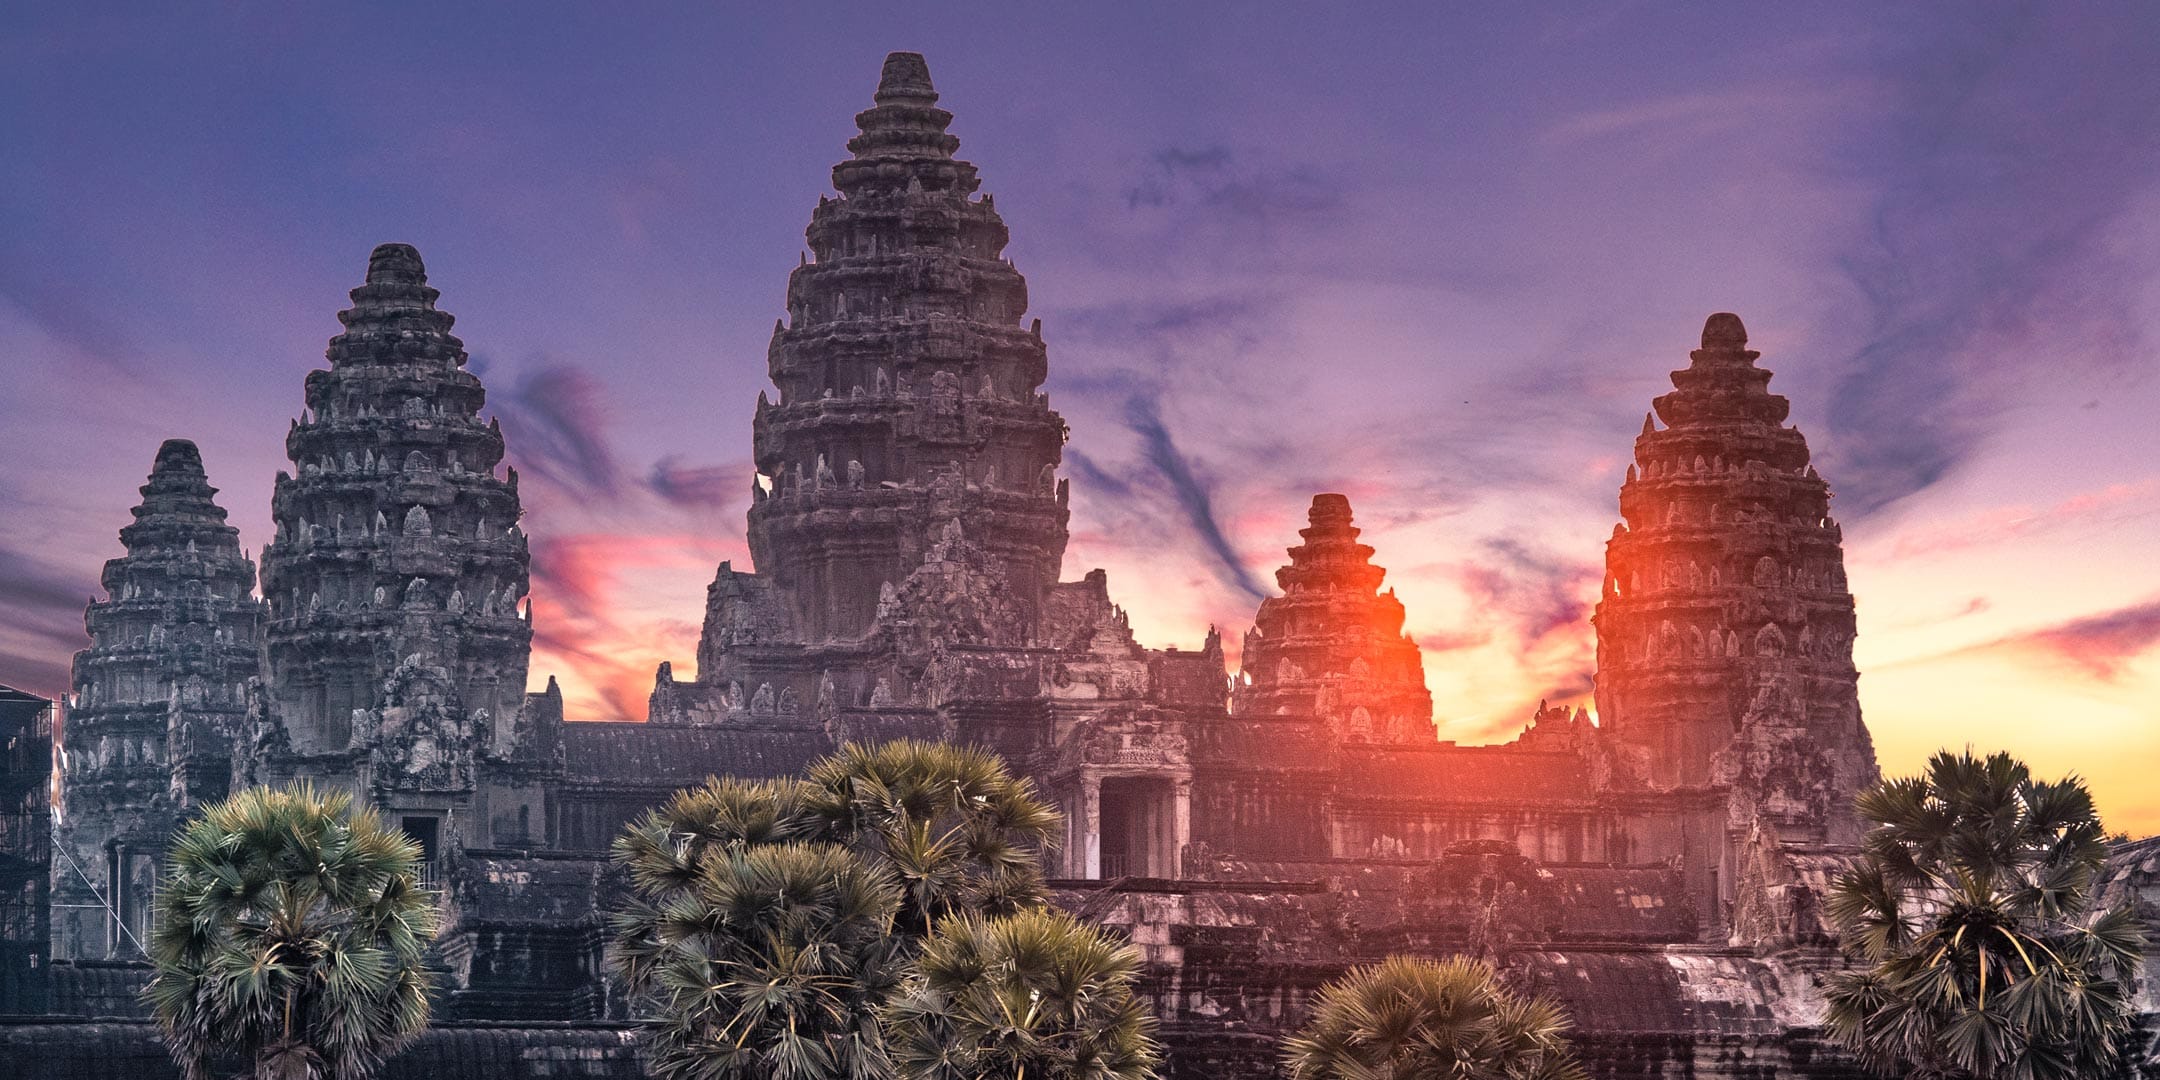 Visiting Angkor Wat – The Ultimate Guide